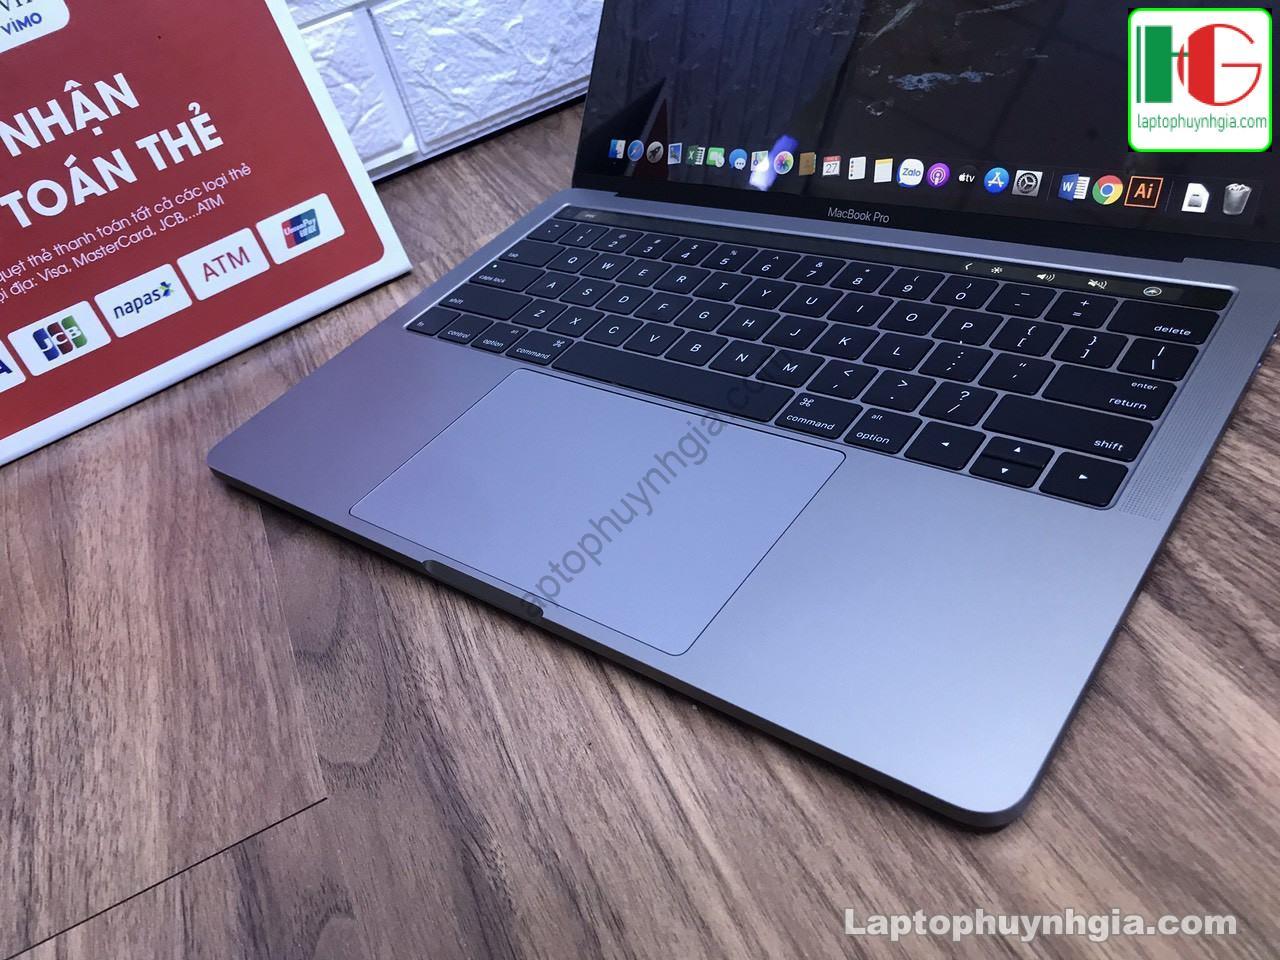 Macbook Pro 2016 I5 8g Ssd 256g Lcd 13 Laptopcubinhduong.vn 2